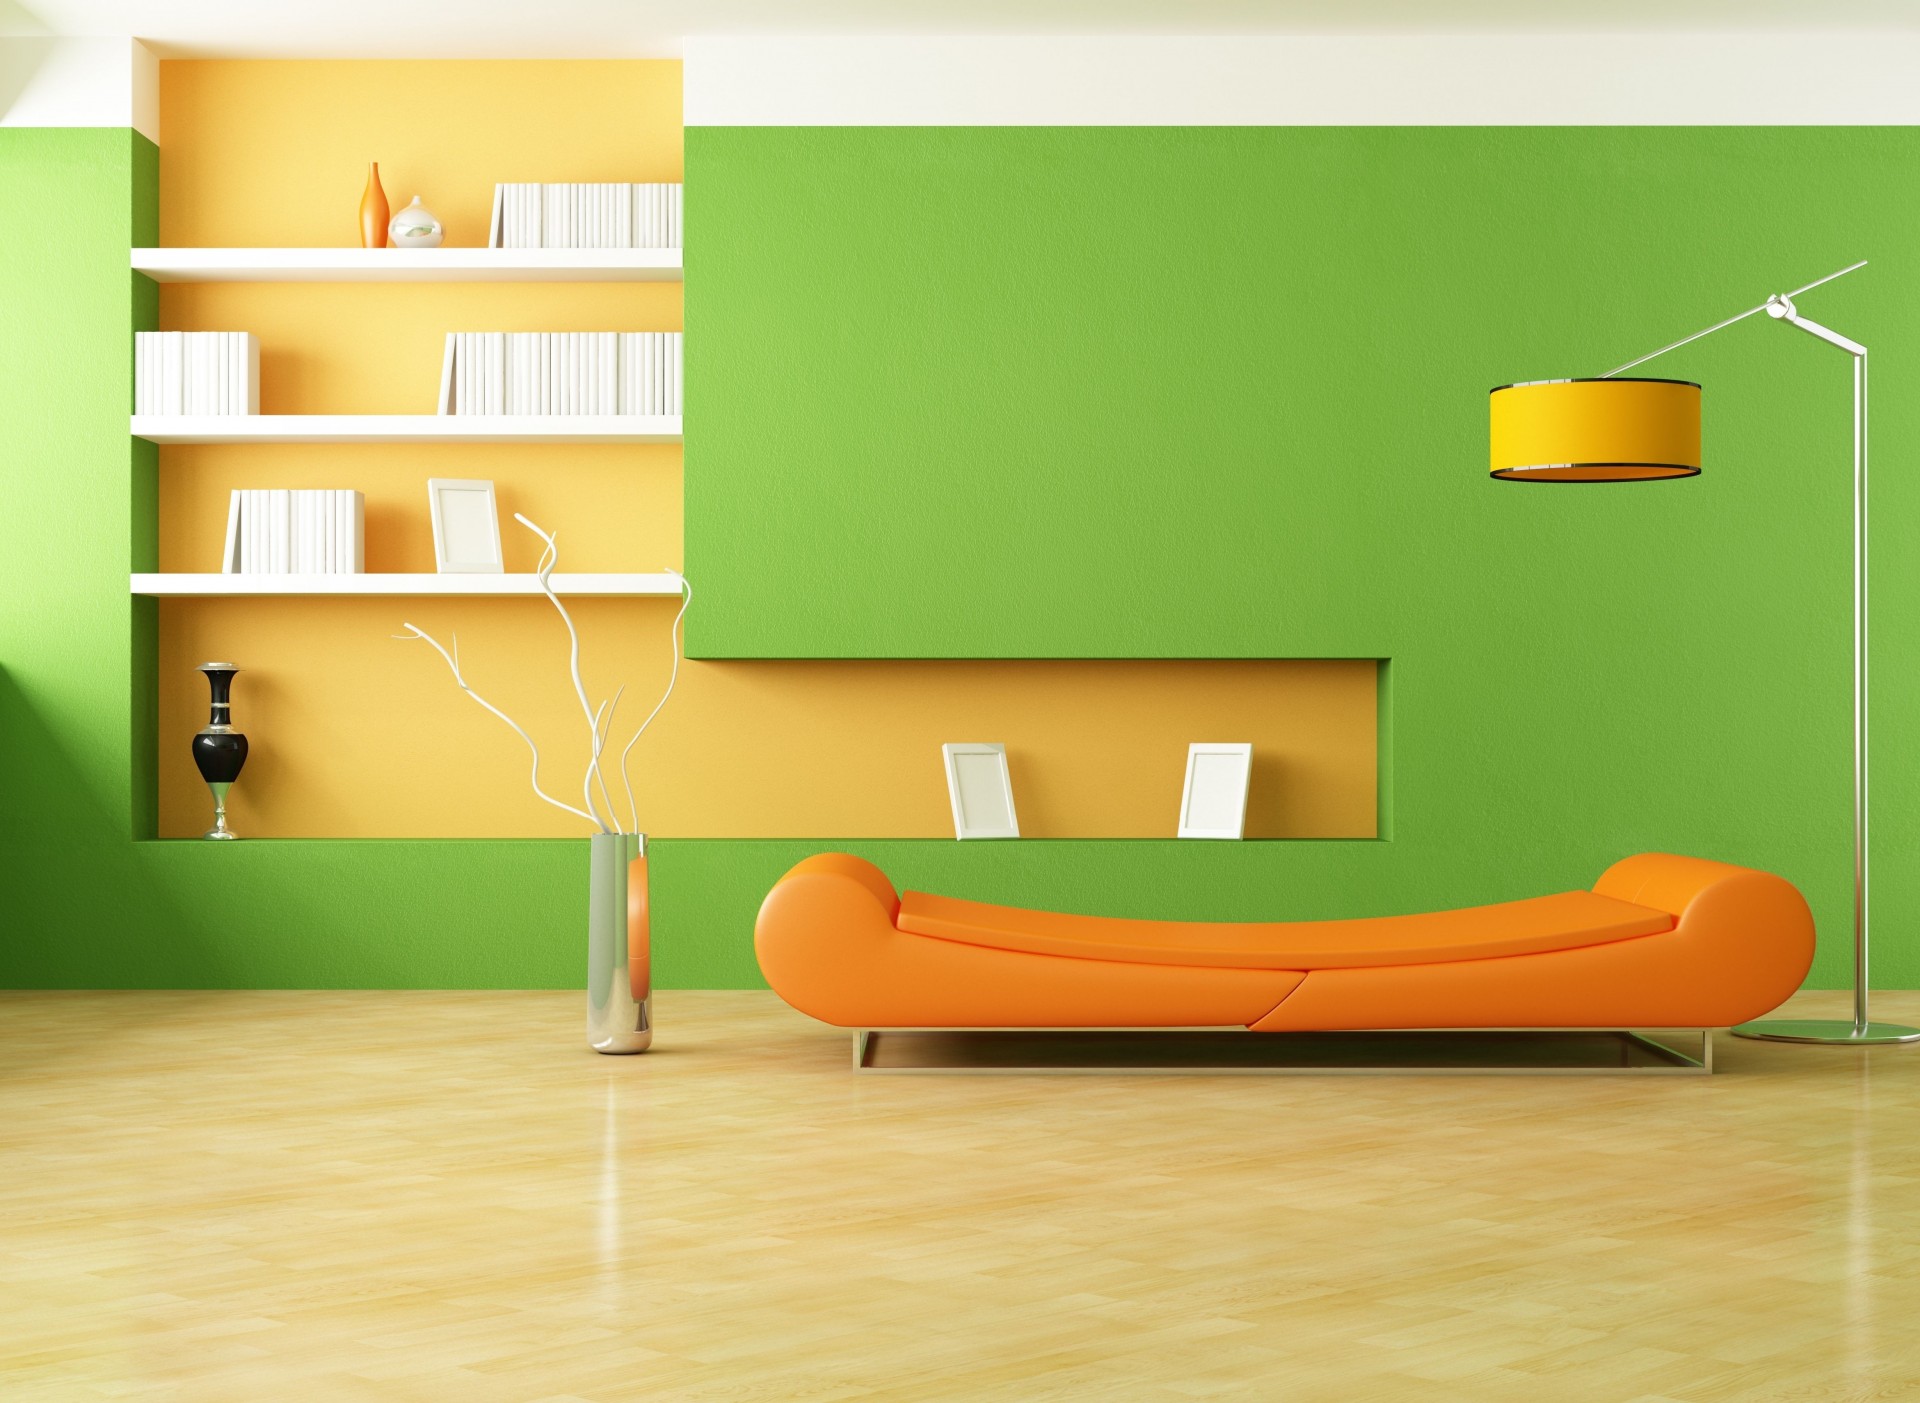 design canapé chambre style minimalisme salon